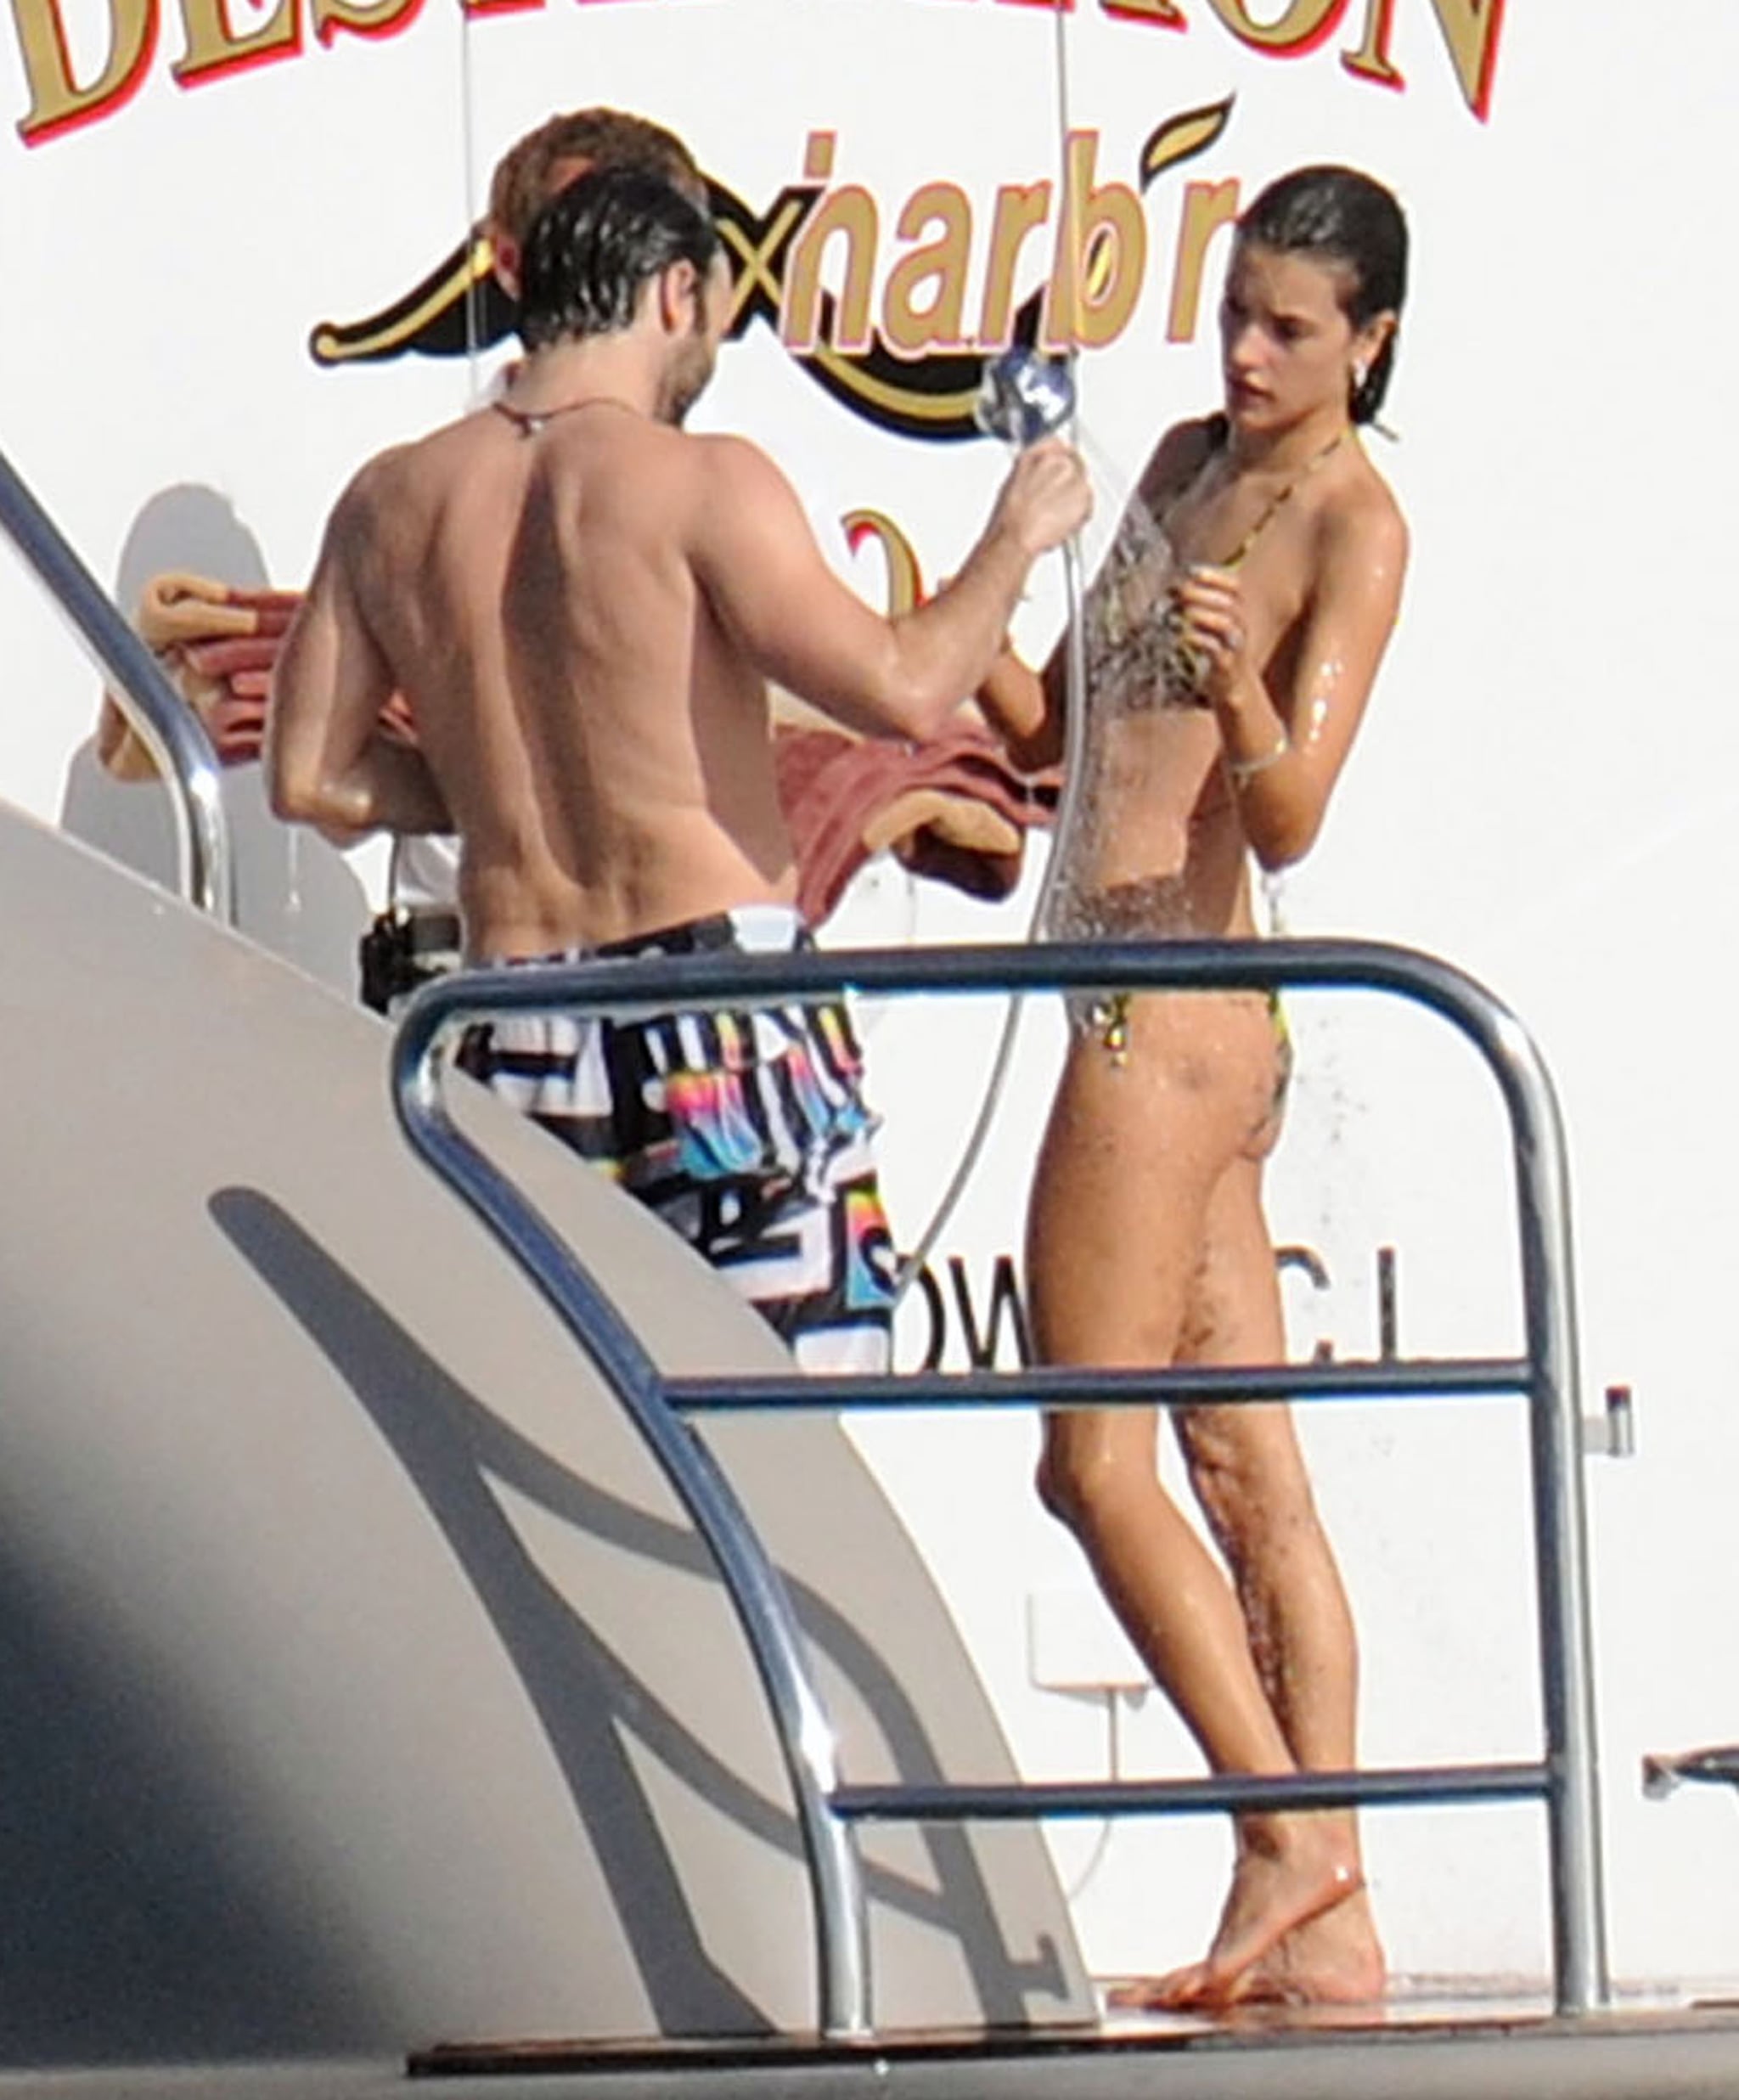 Leaked alessandra ambrosio caught by paparazzi in bikini during photoshoot